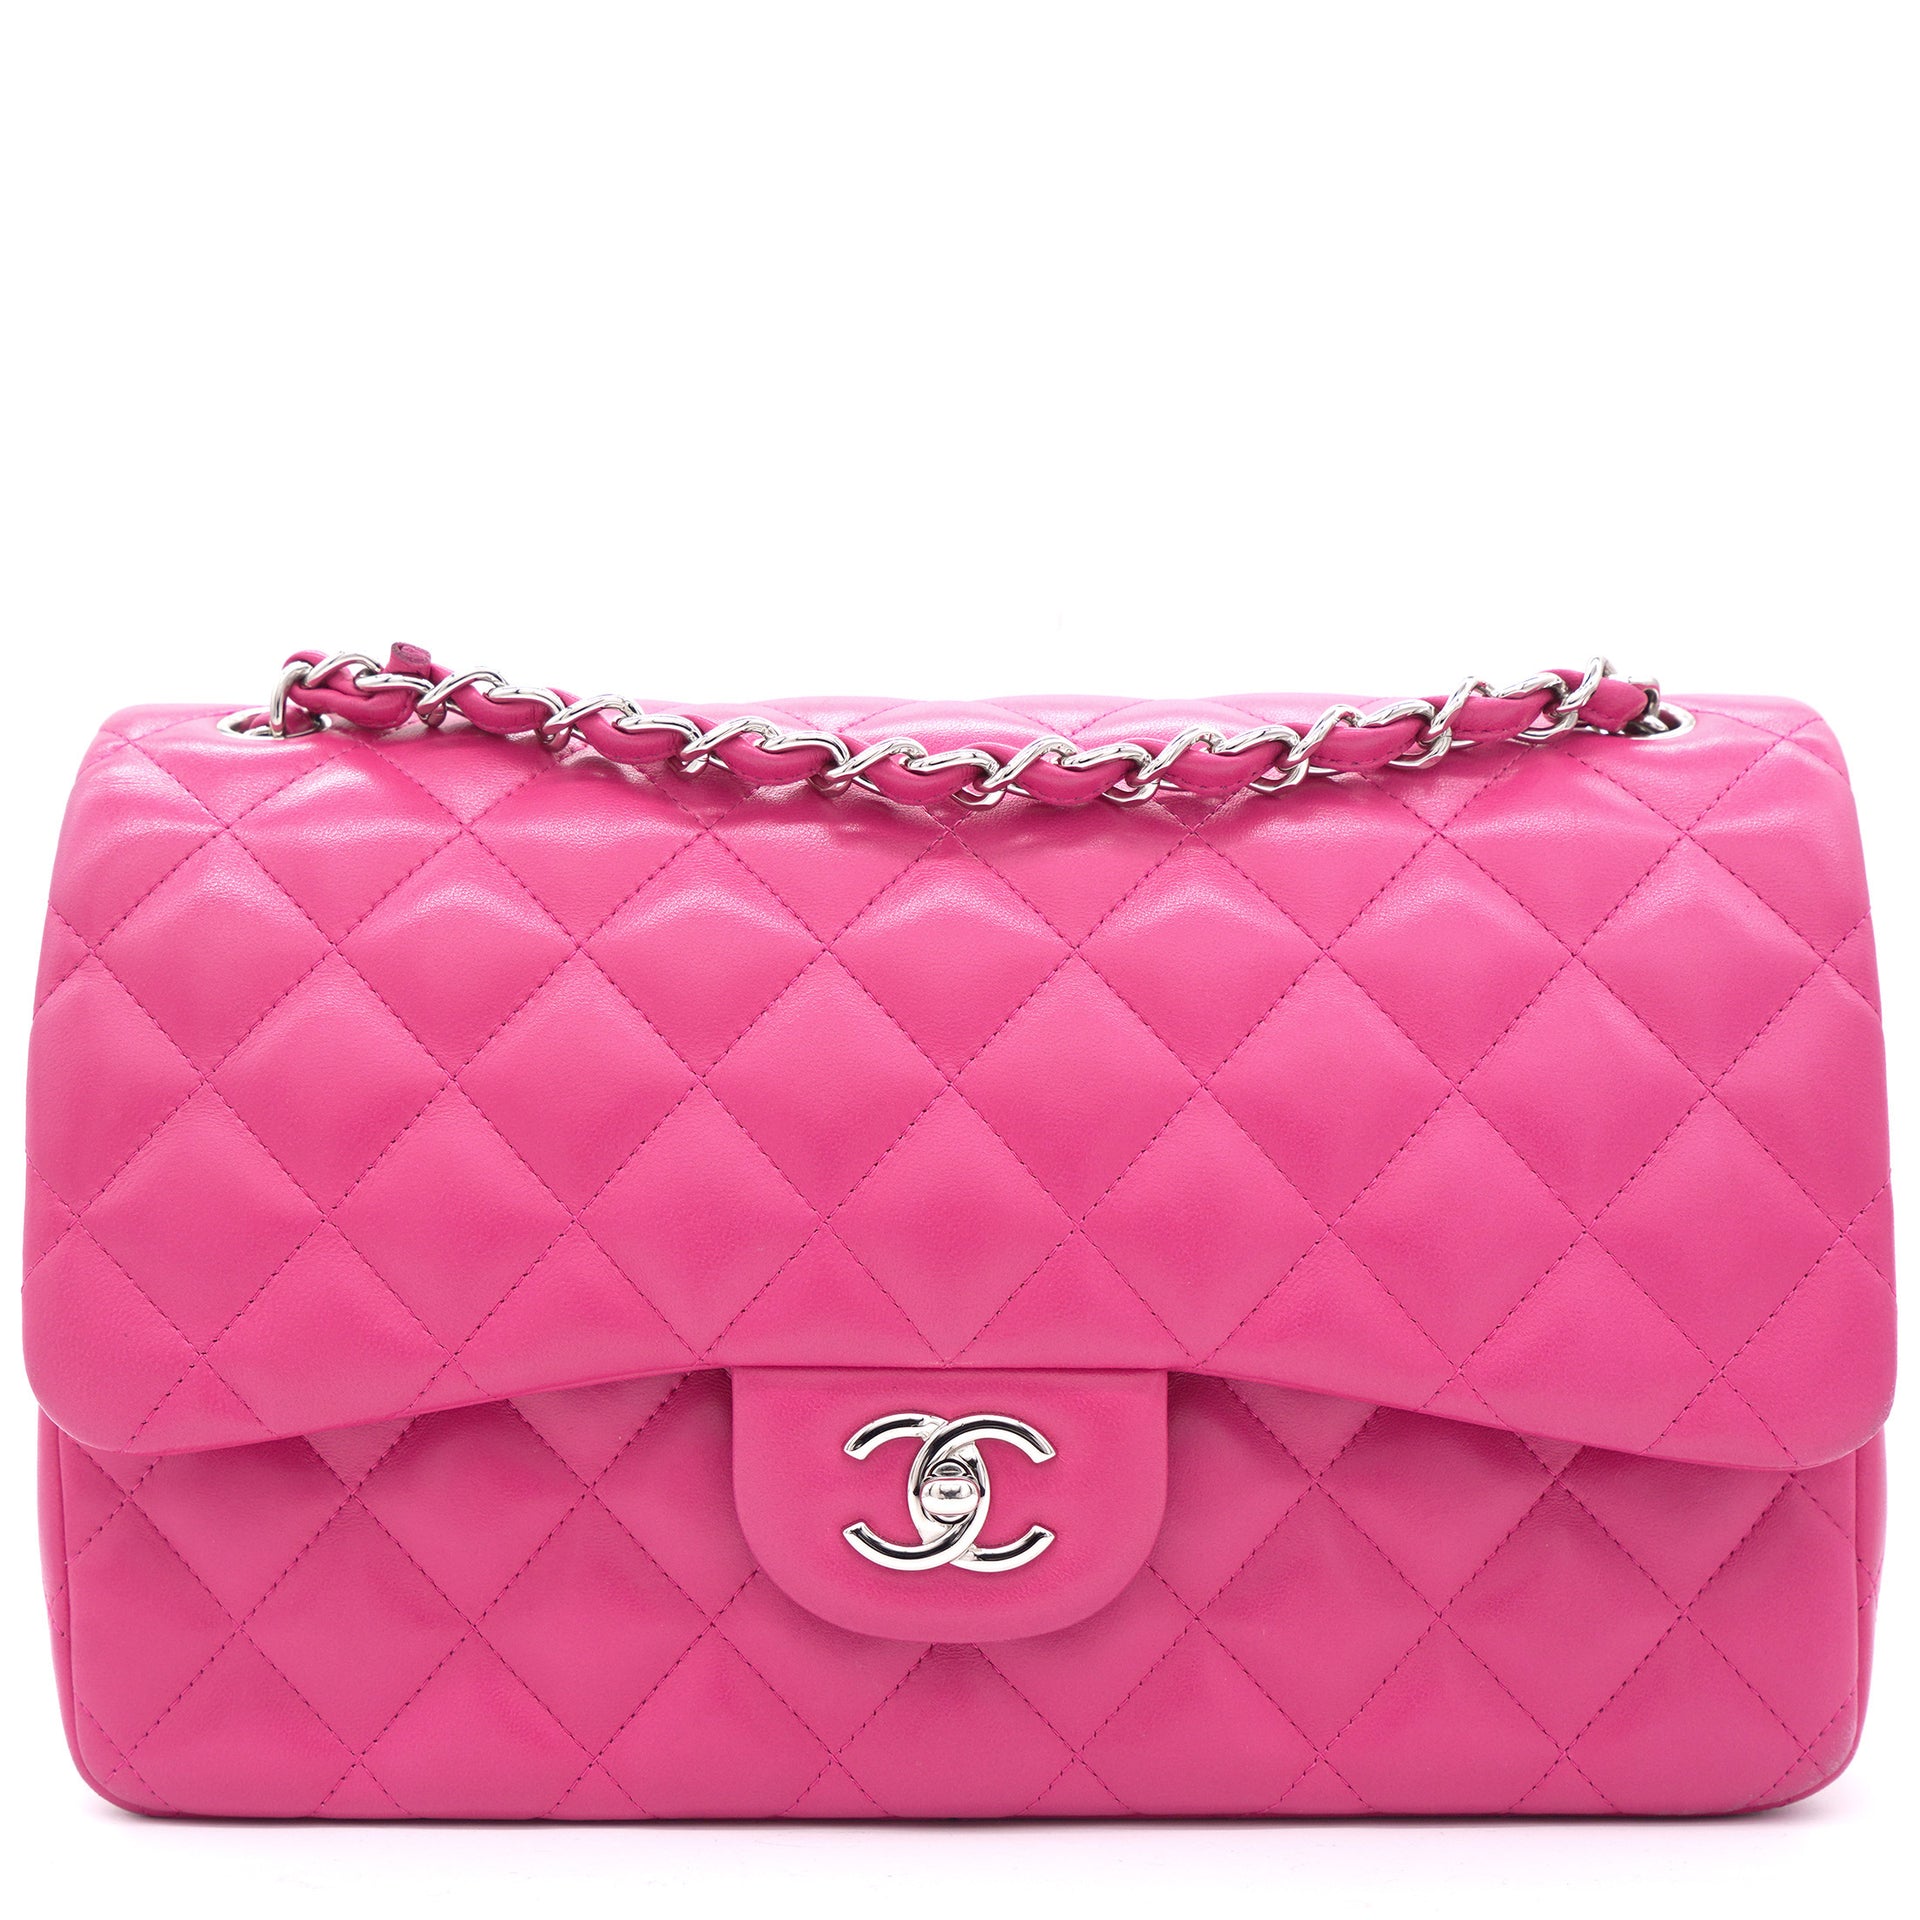 New Chanel 22P Hot Rose Pink Barbie Raspberry Caviar Small Flap Classic Bag  Handbag purse light gold hardware fuschia Dark pink Womens Fashion Bags   Wallets Shoulder Bags on Carousell